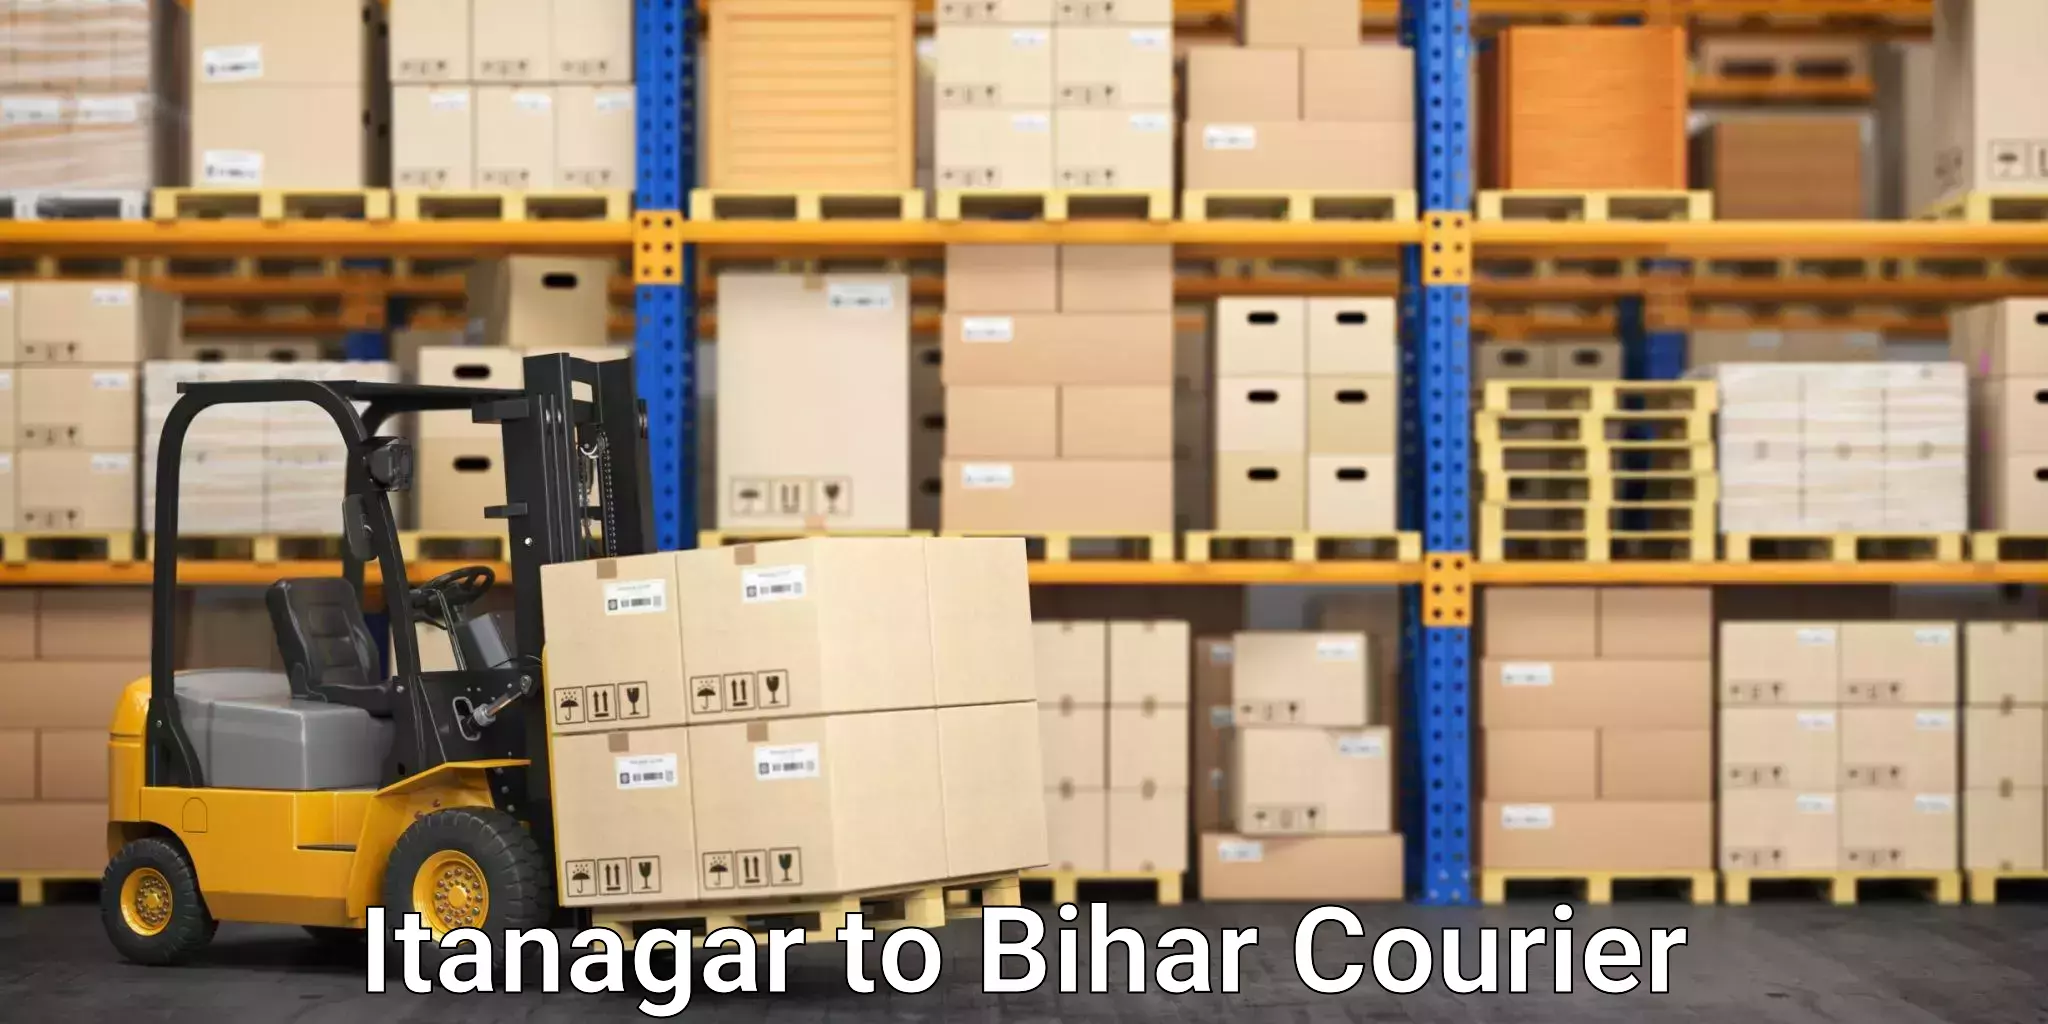 Multi-national courier services Itanagar to Sandesh